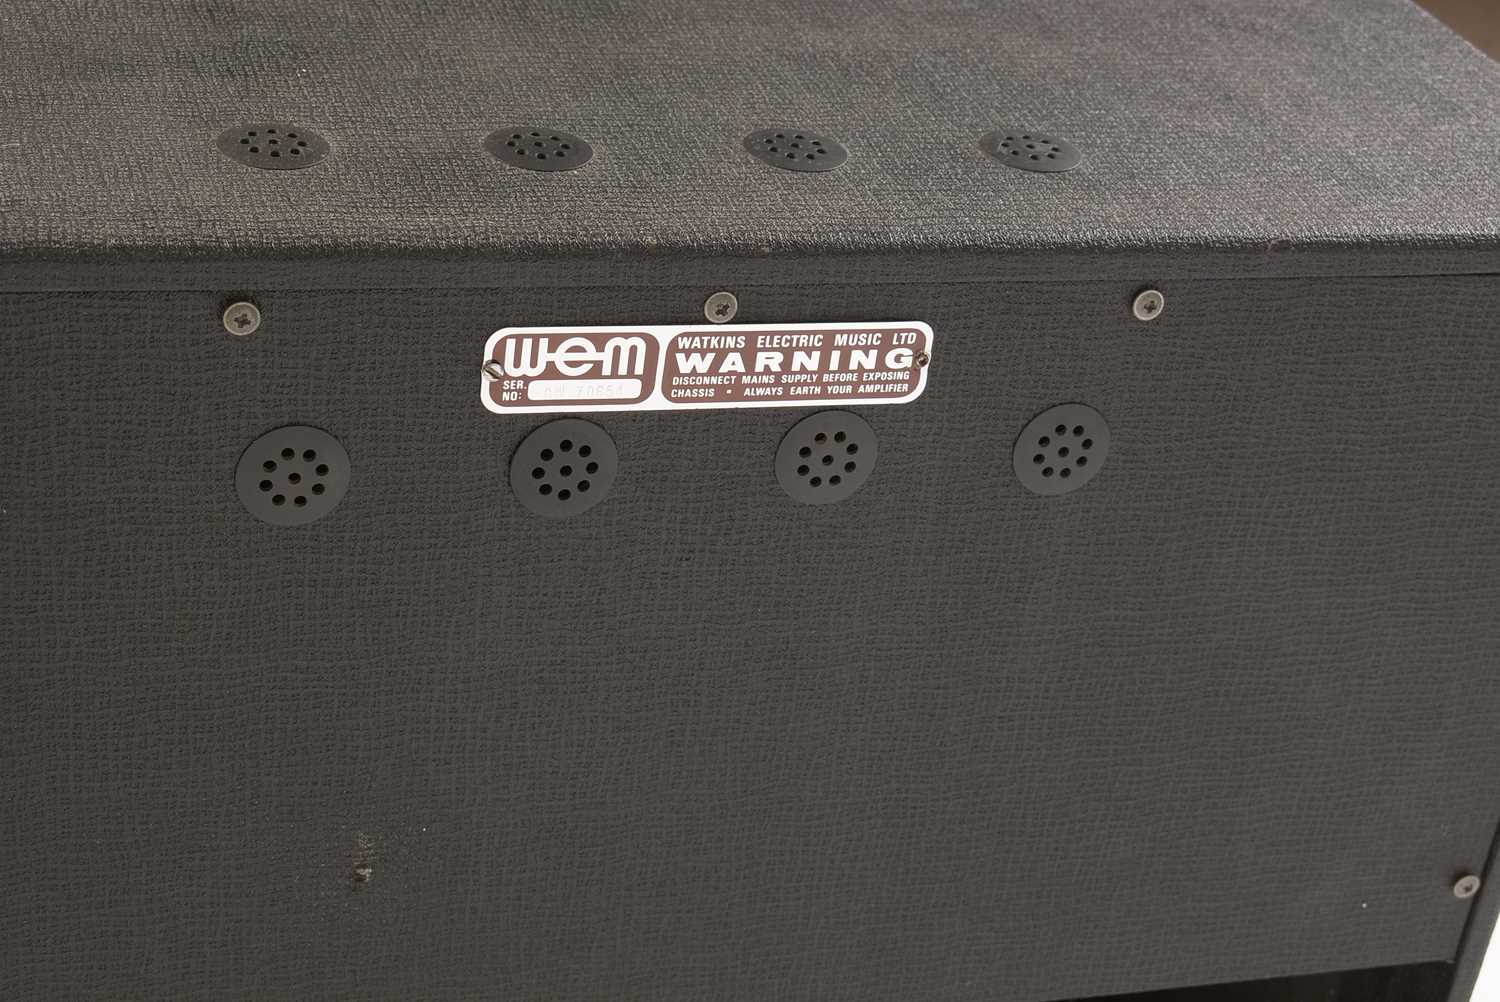 A Watkin Dominator 50 guitar amplifier. - Image 2 of 3